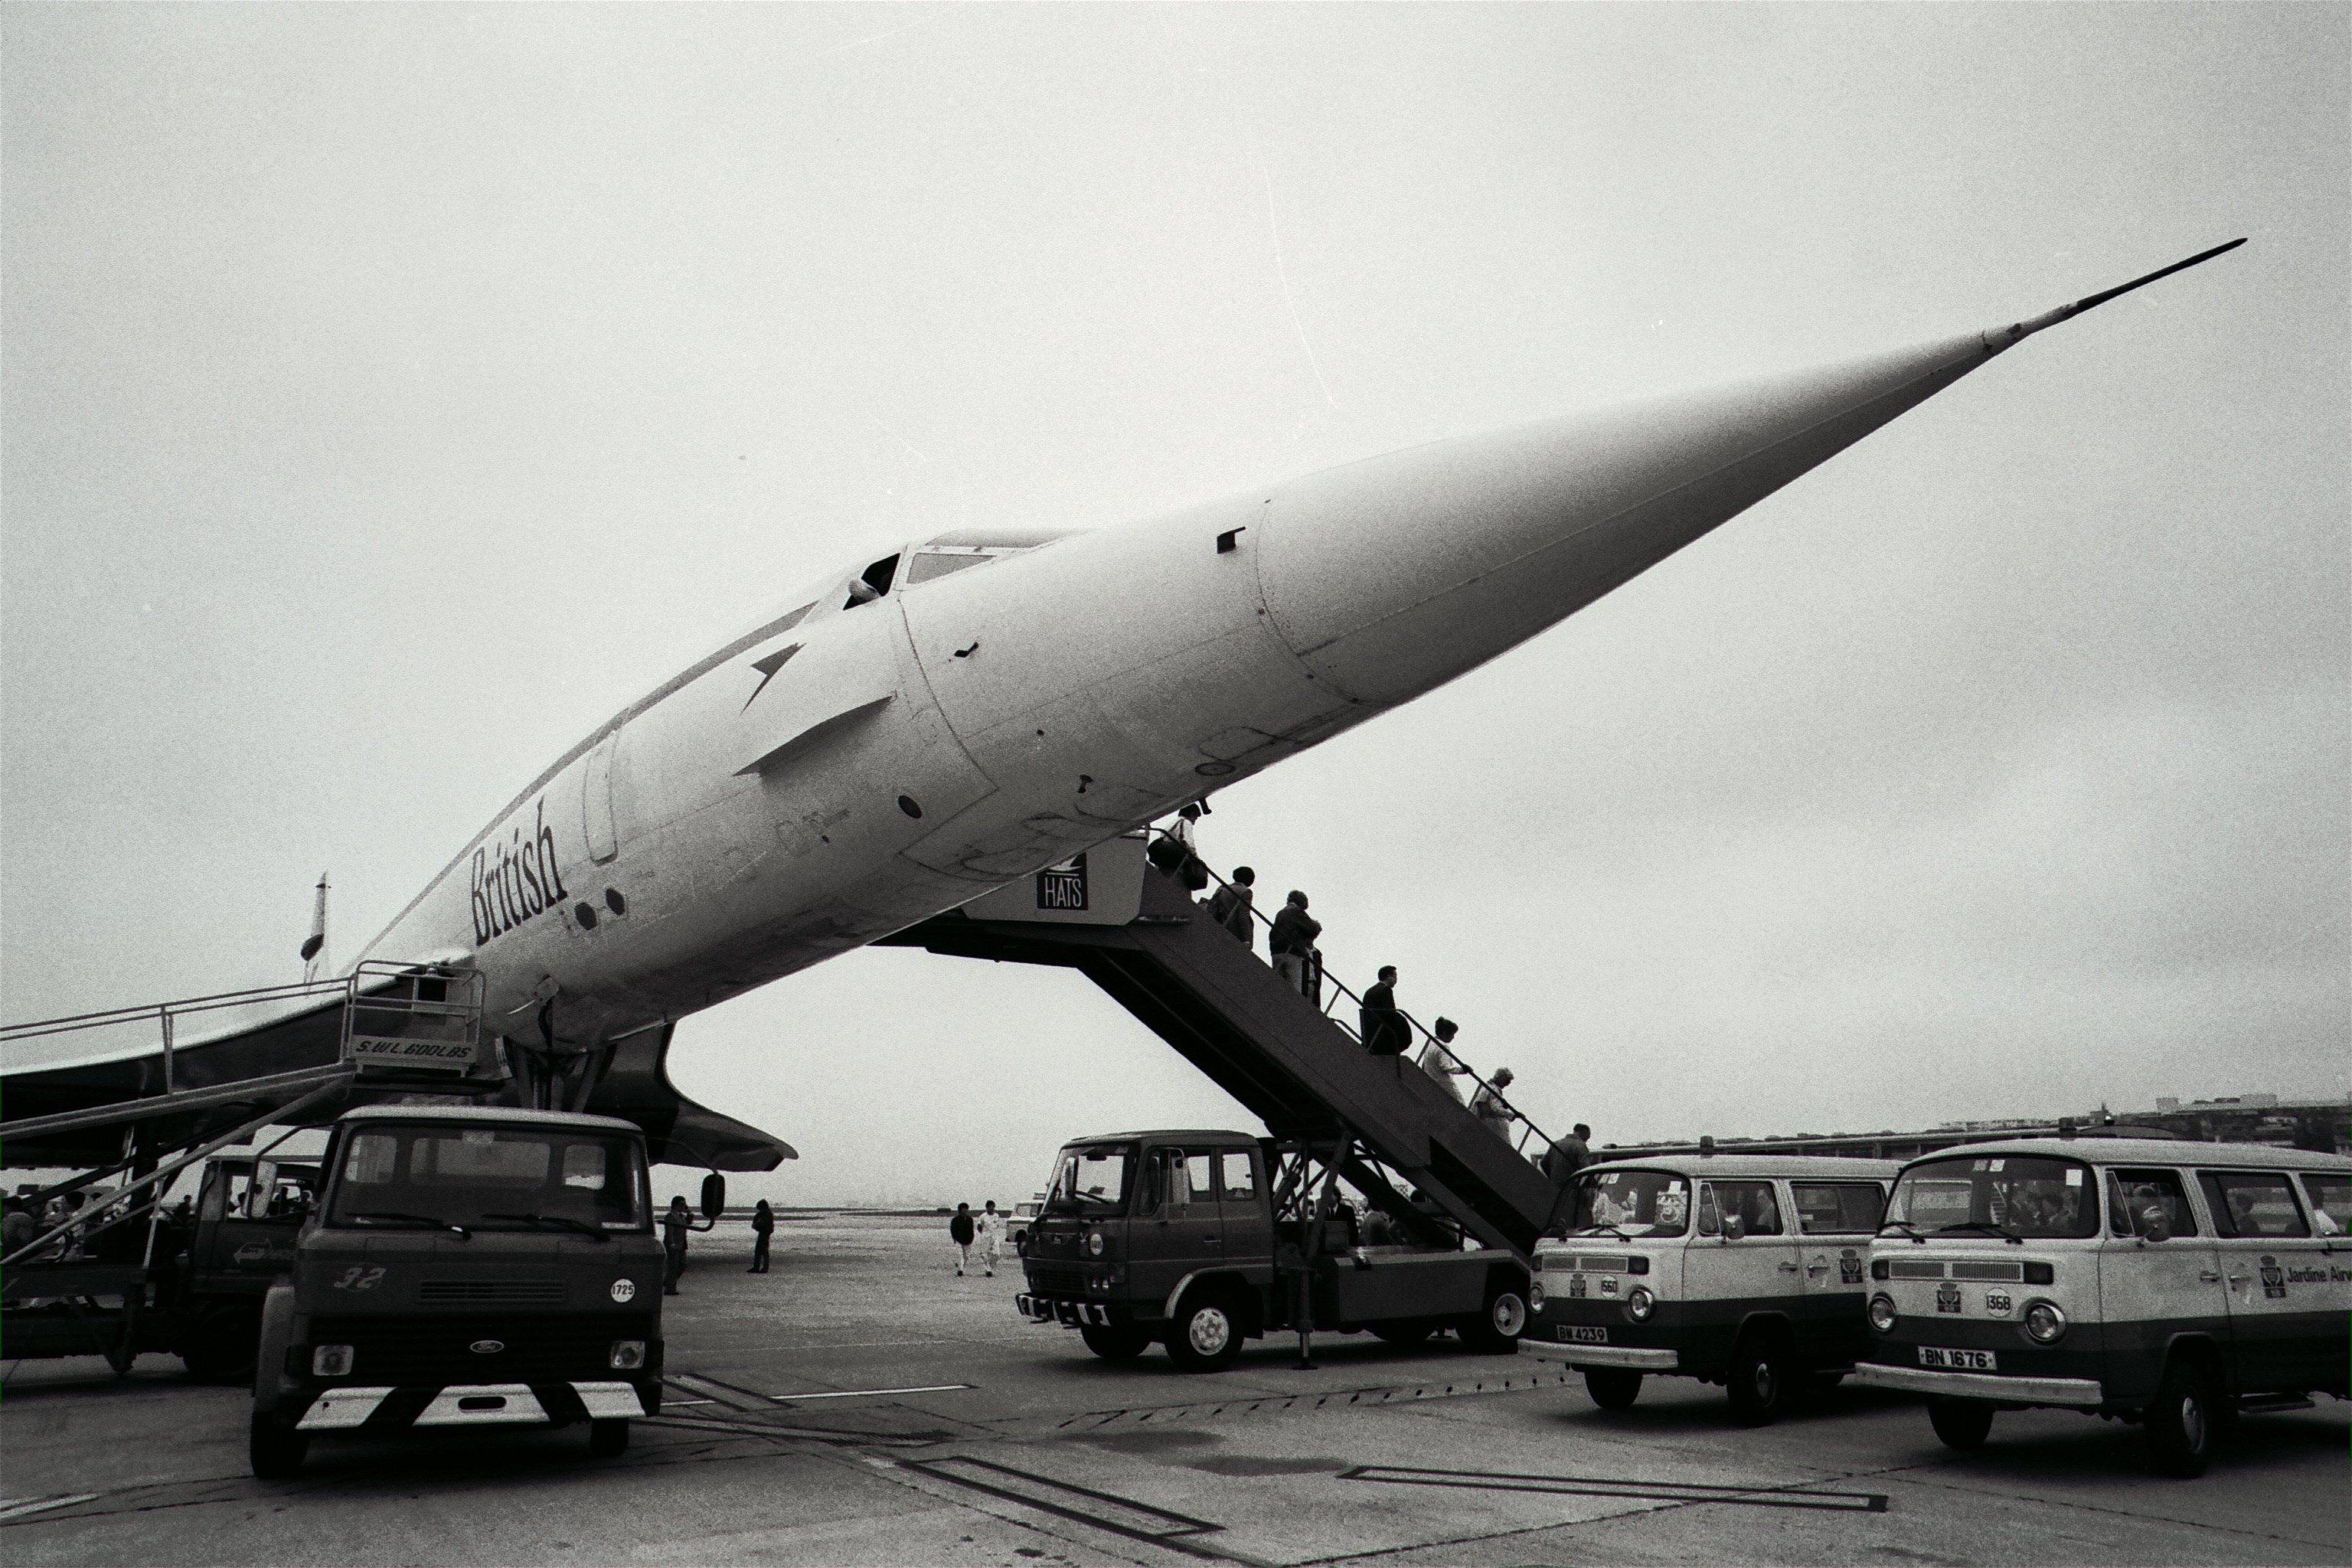 British Airways’ flagship, the Concorde, arrives at Kai Tak Airport. Photo: SCMP